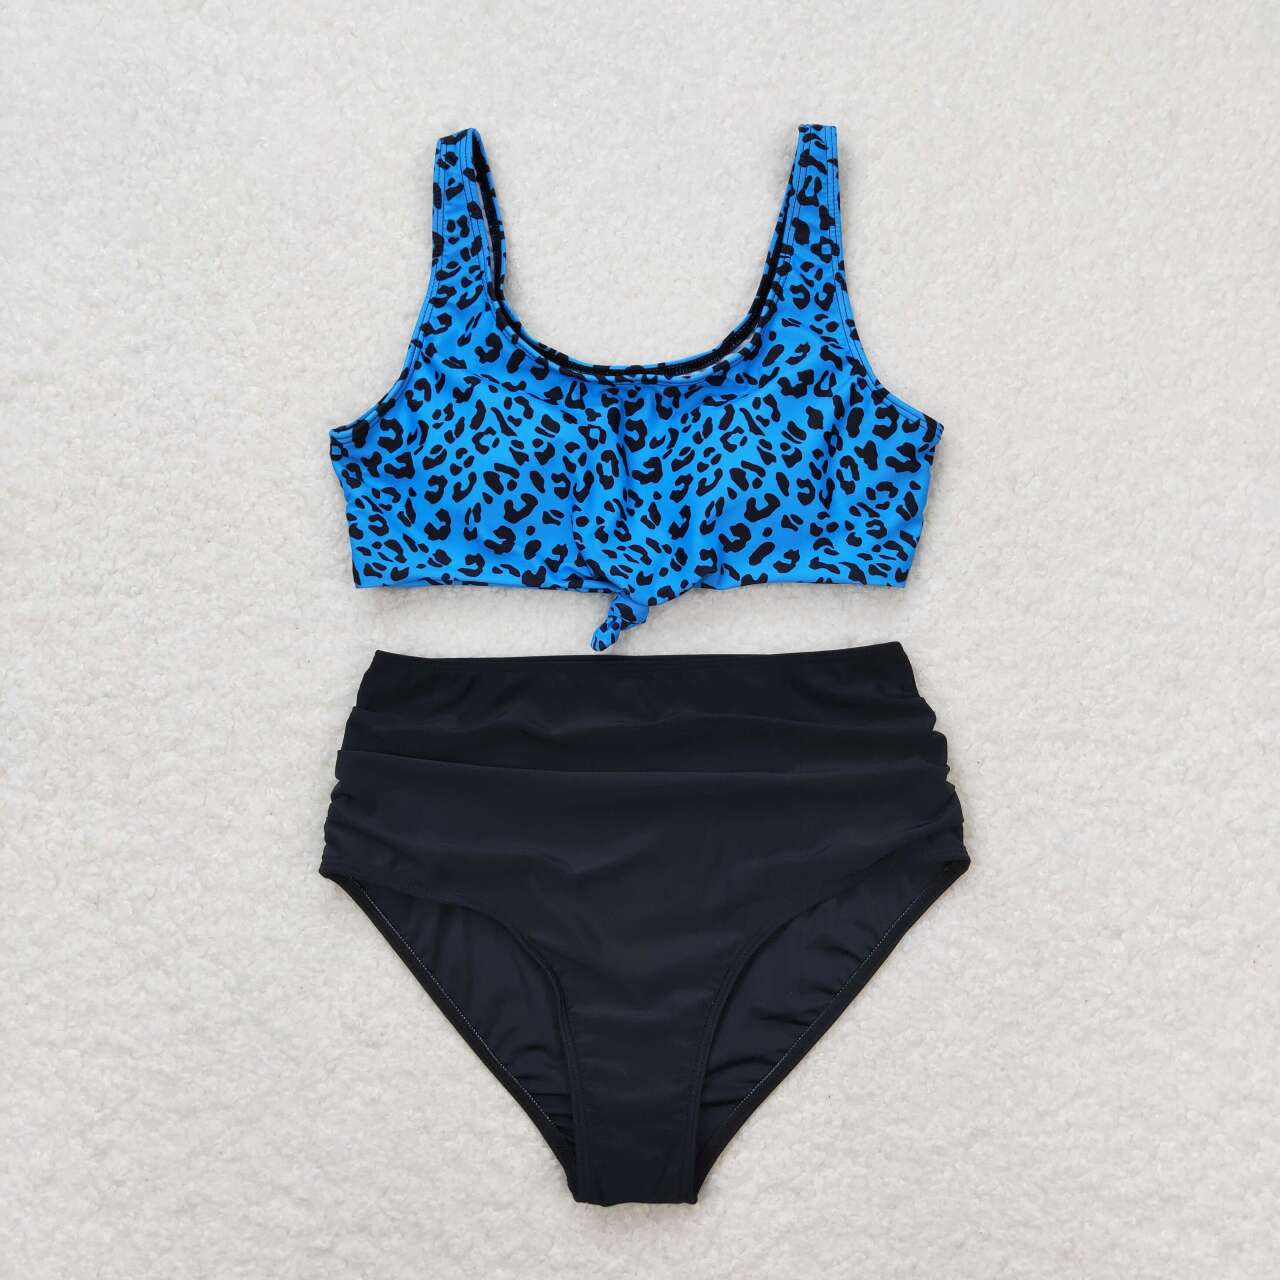 adult clothes woman two piece swimsuit bikini blue leopard